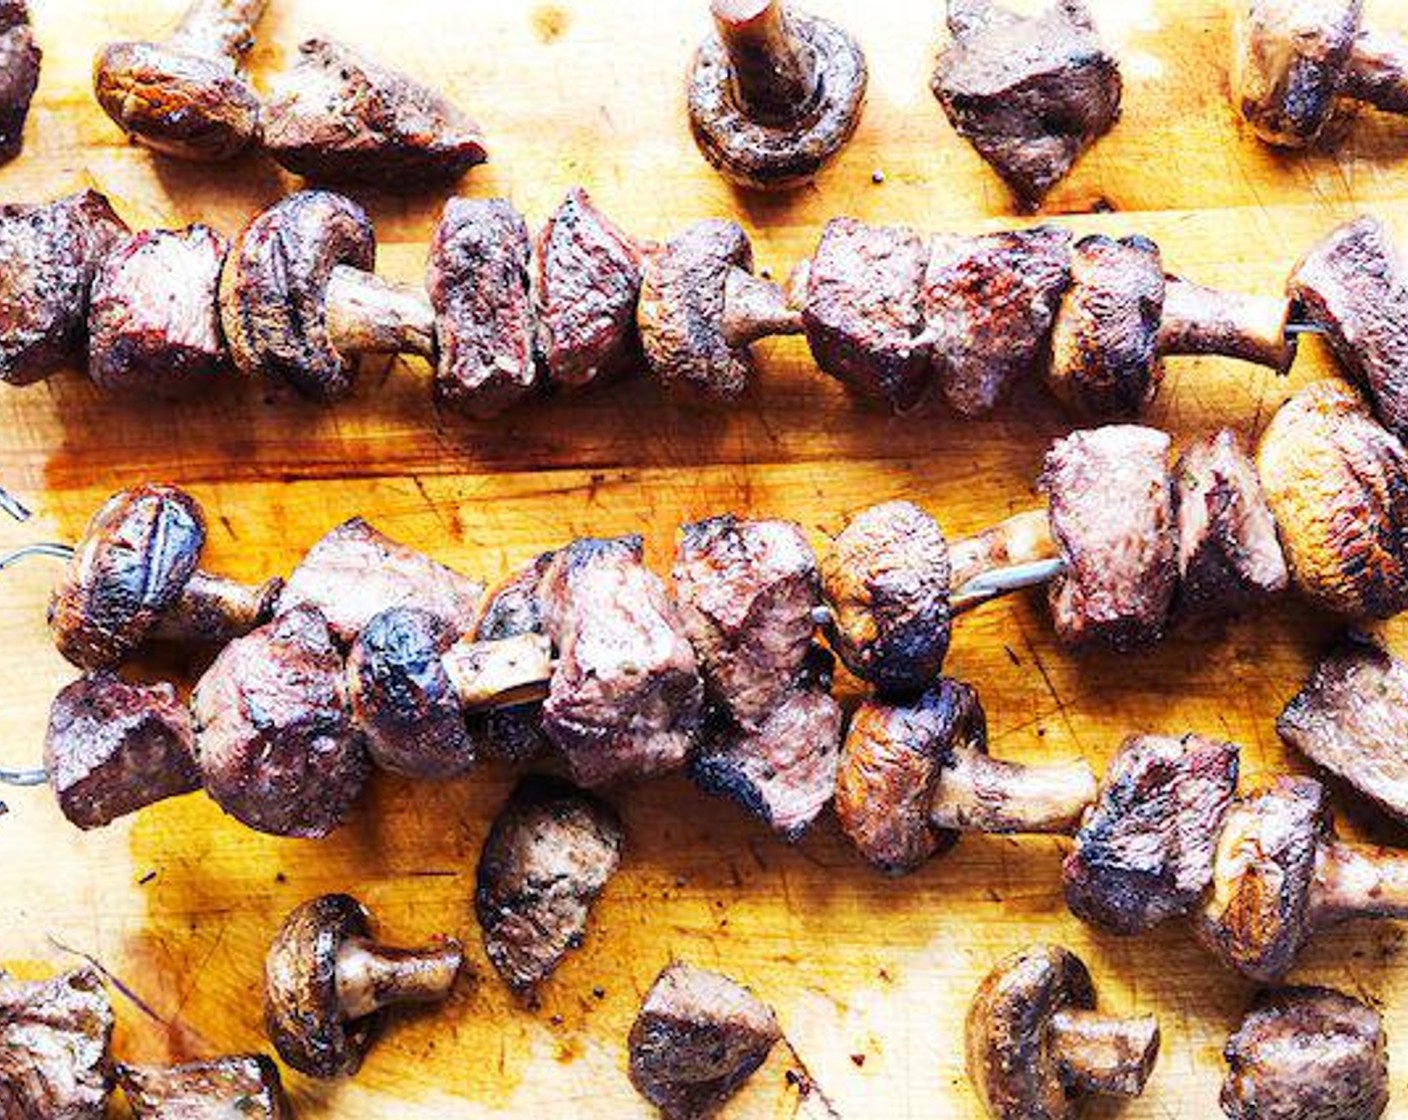 Grilled Steak and Mushroom Kabobs